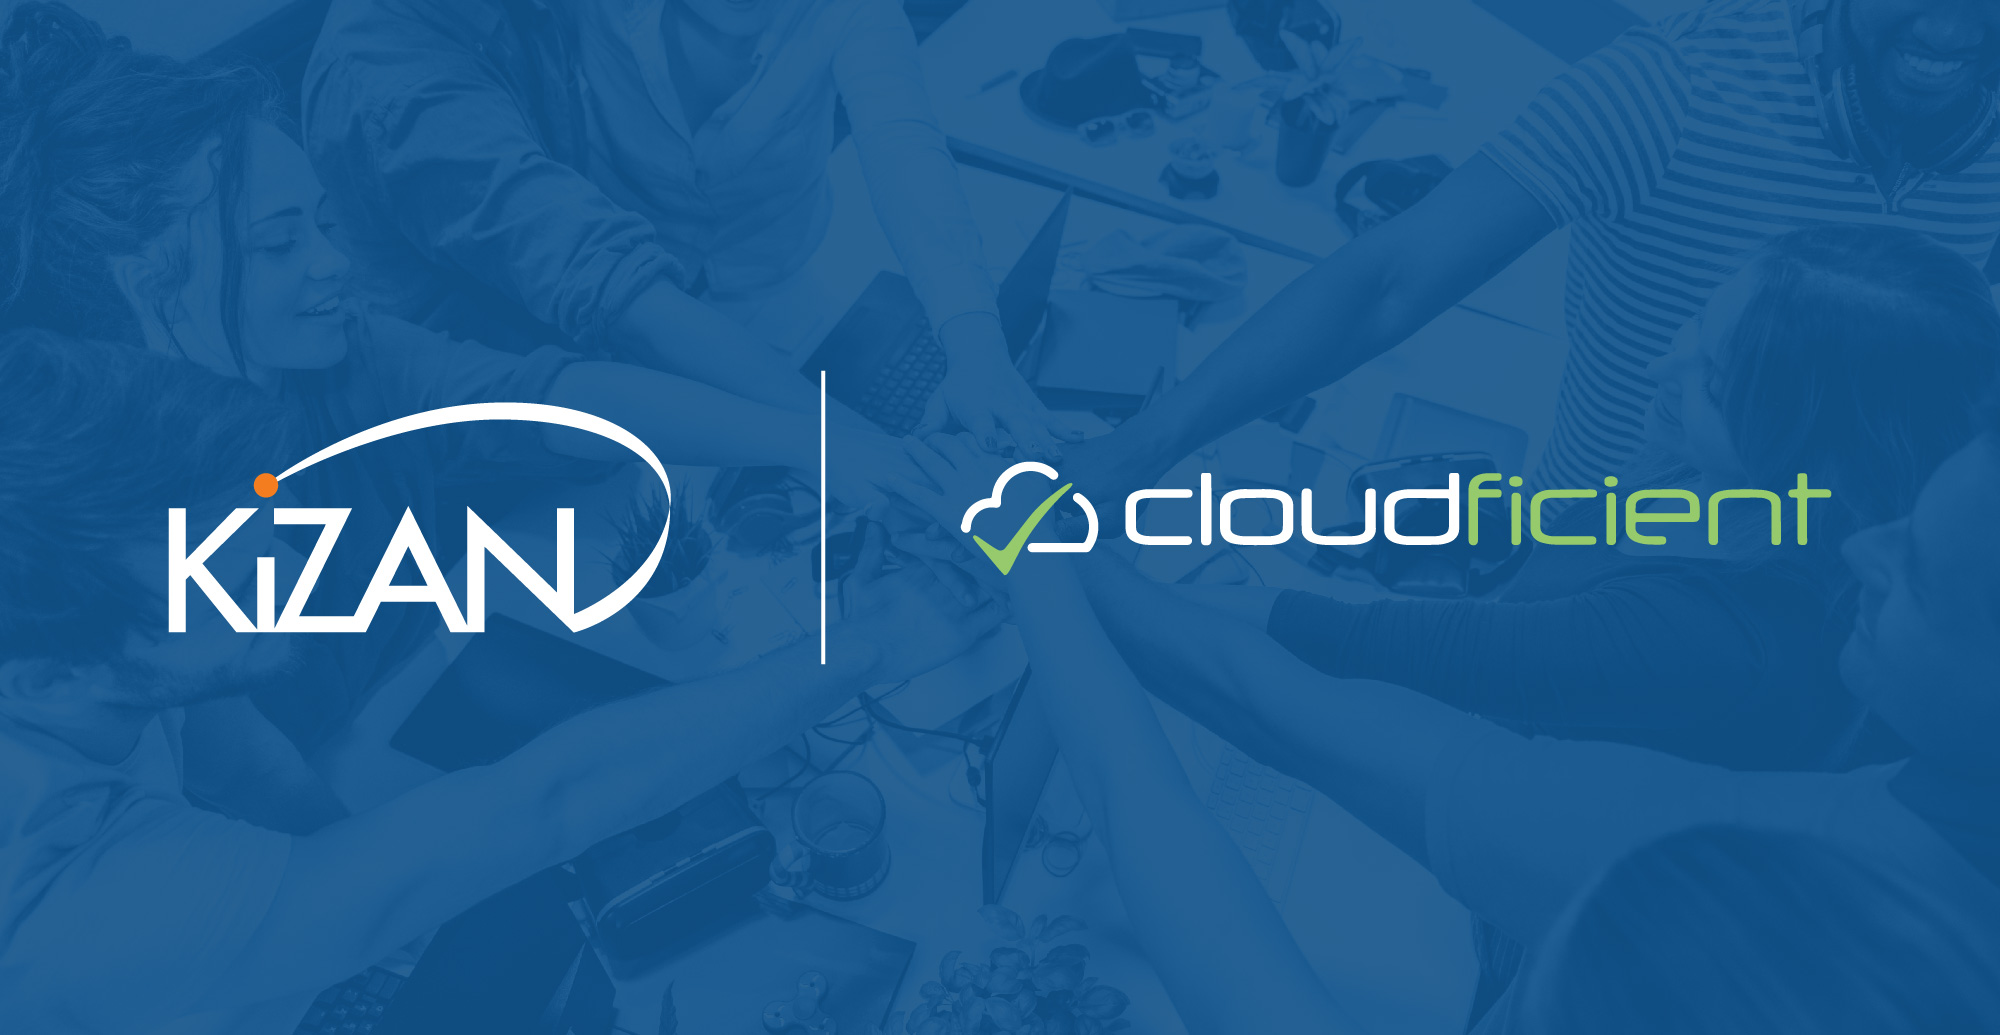 KiZAN Technologies and Cloudficient Announce Partnership